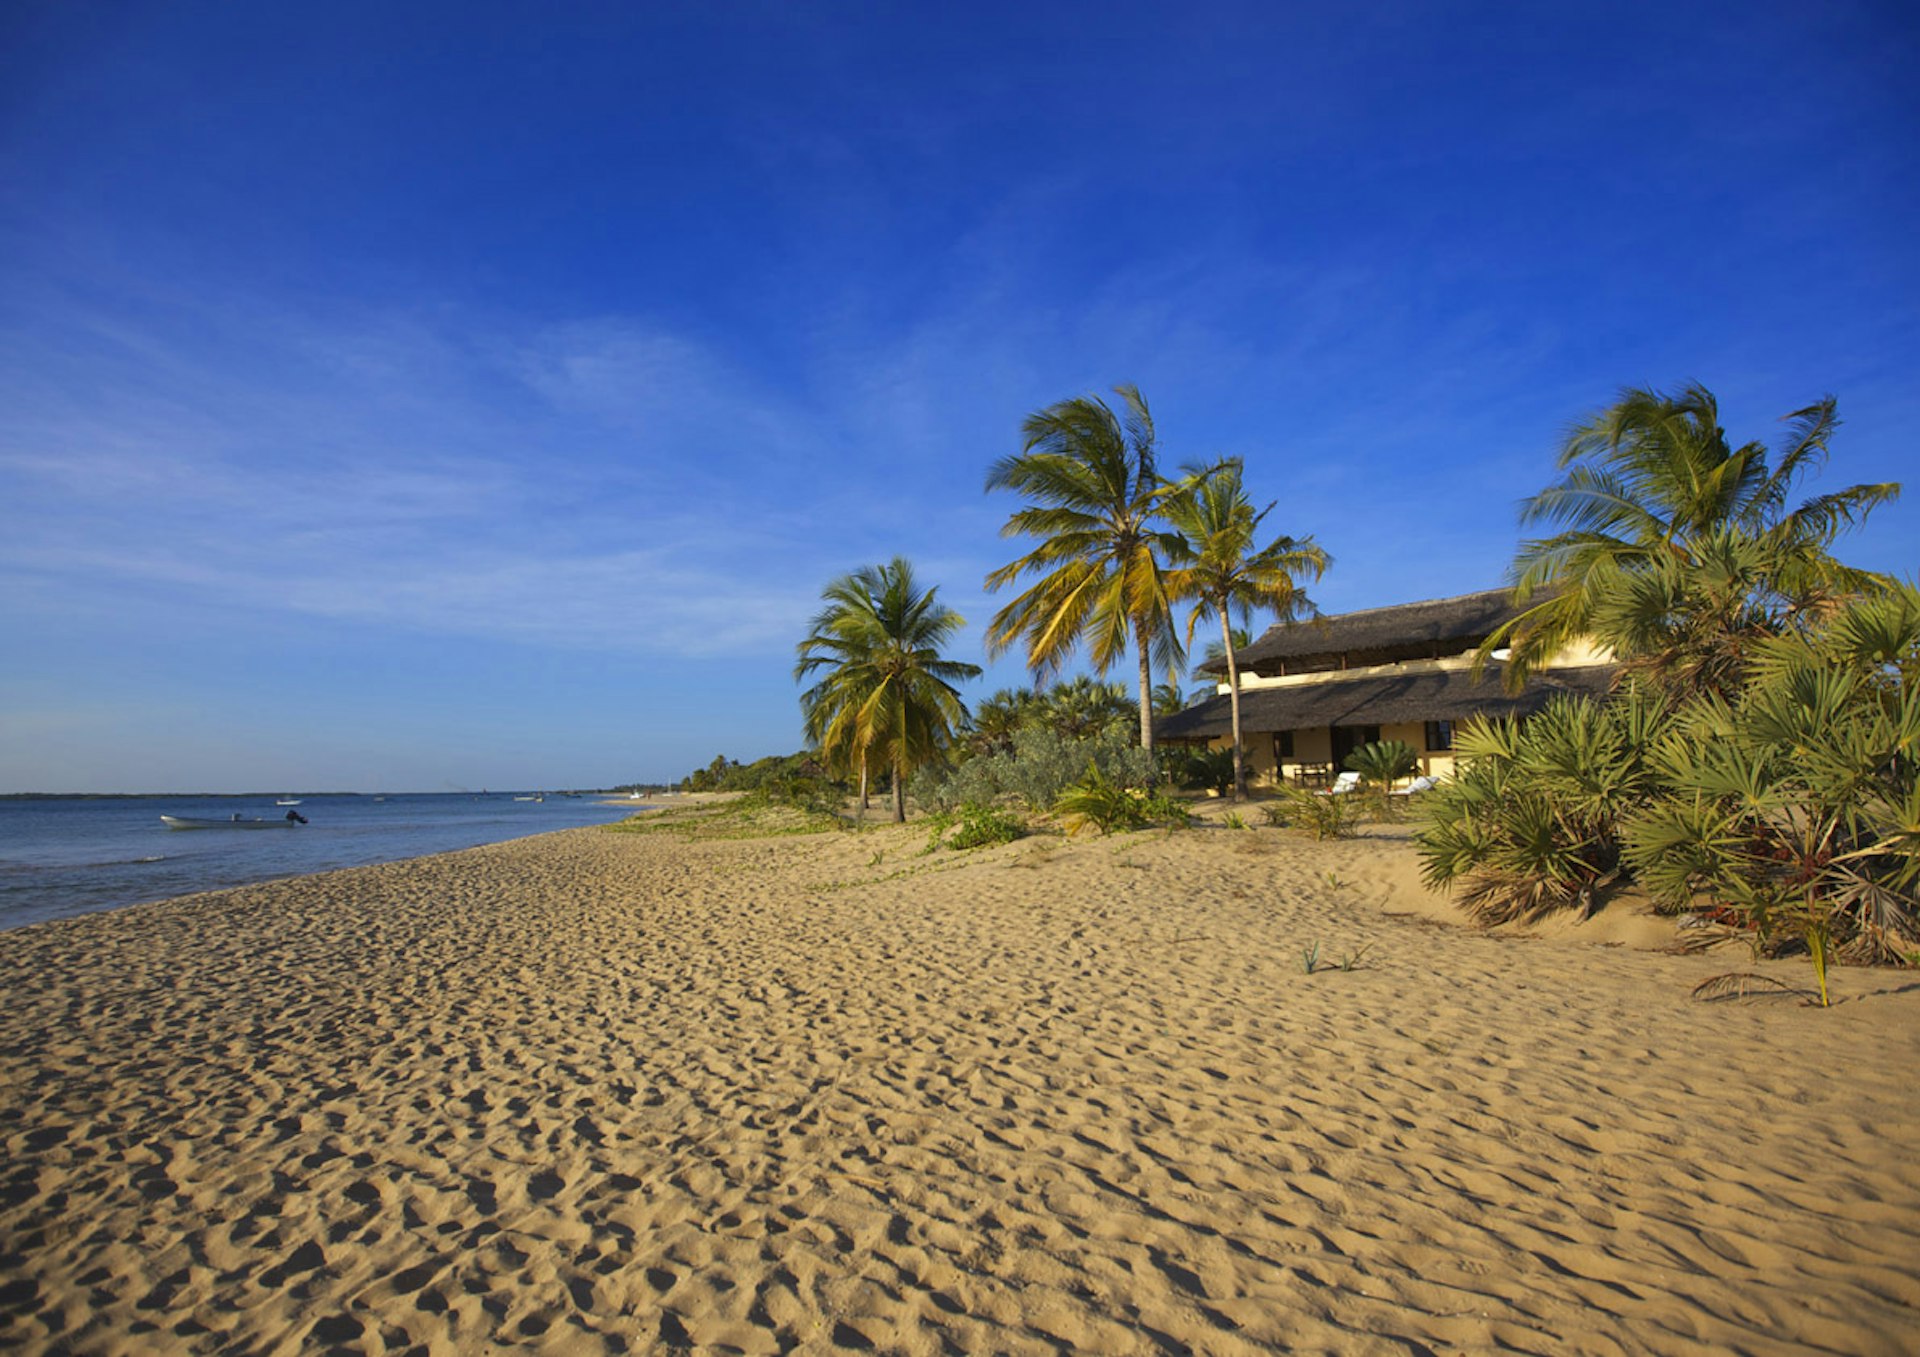 A sandy palm-lined beach